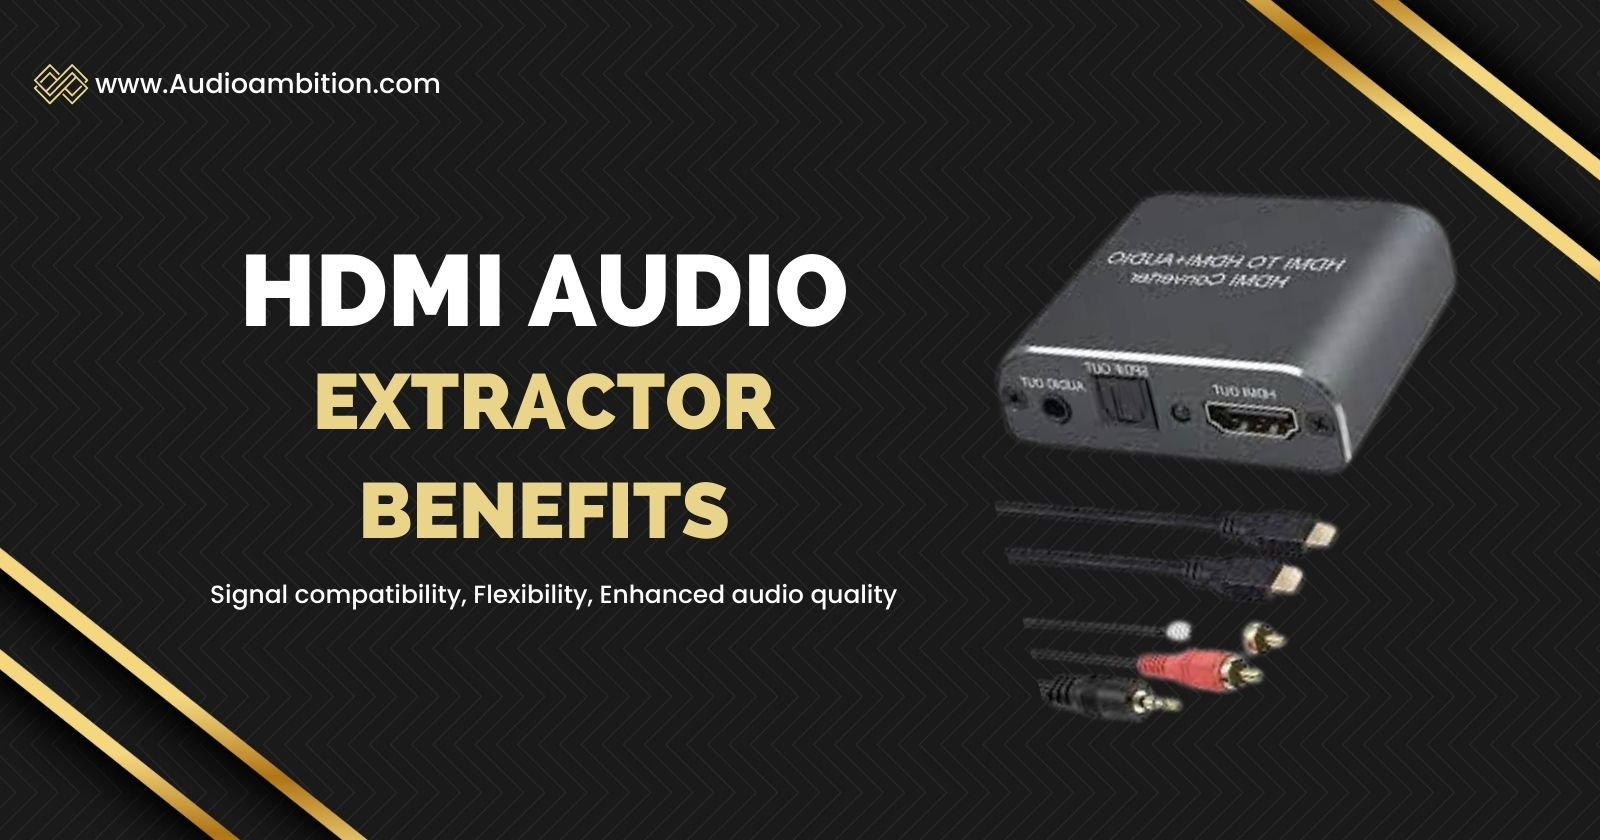 HDMI Audio Extractor Benefits